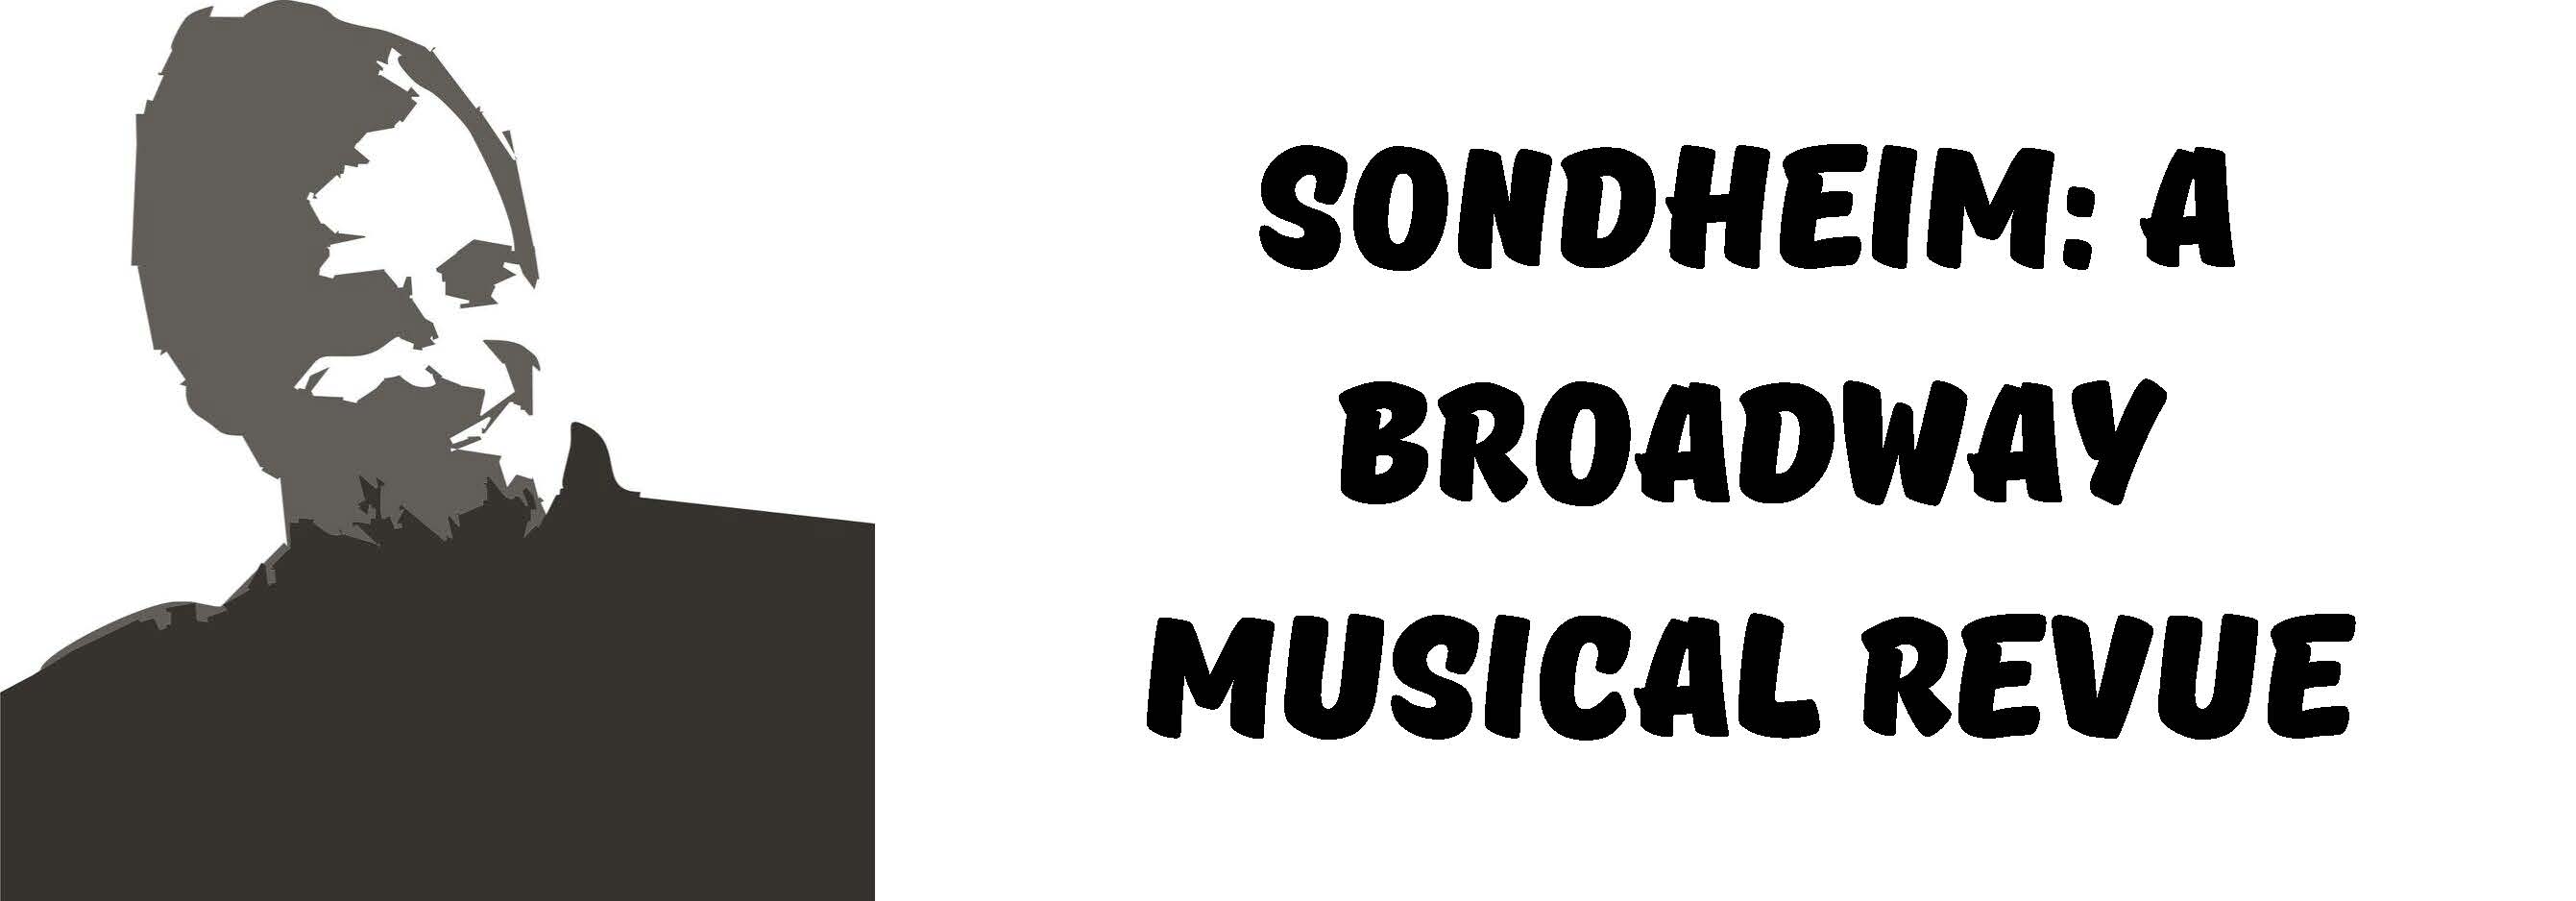 Sondheim: A Broadway Musical Revue